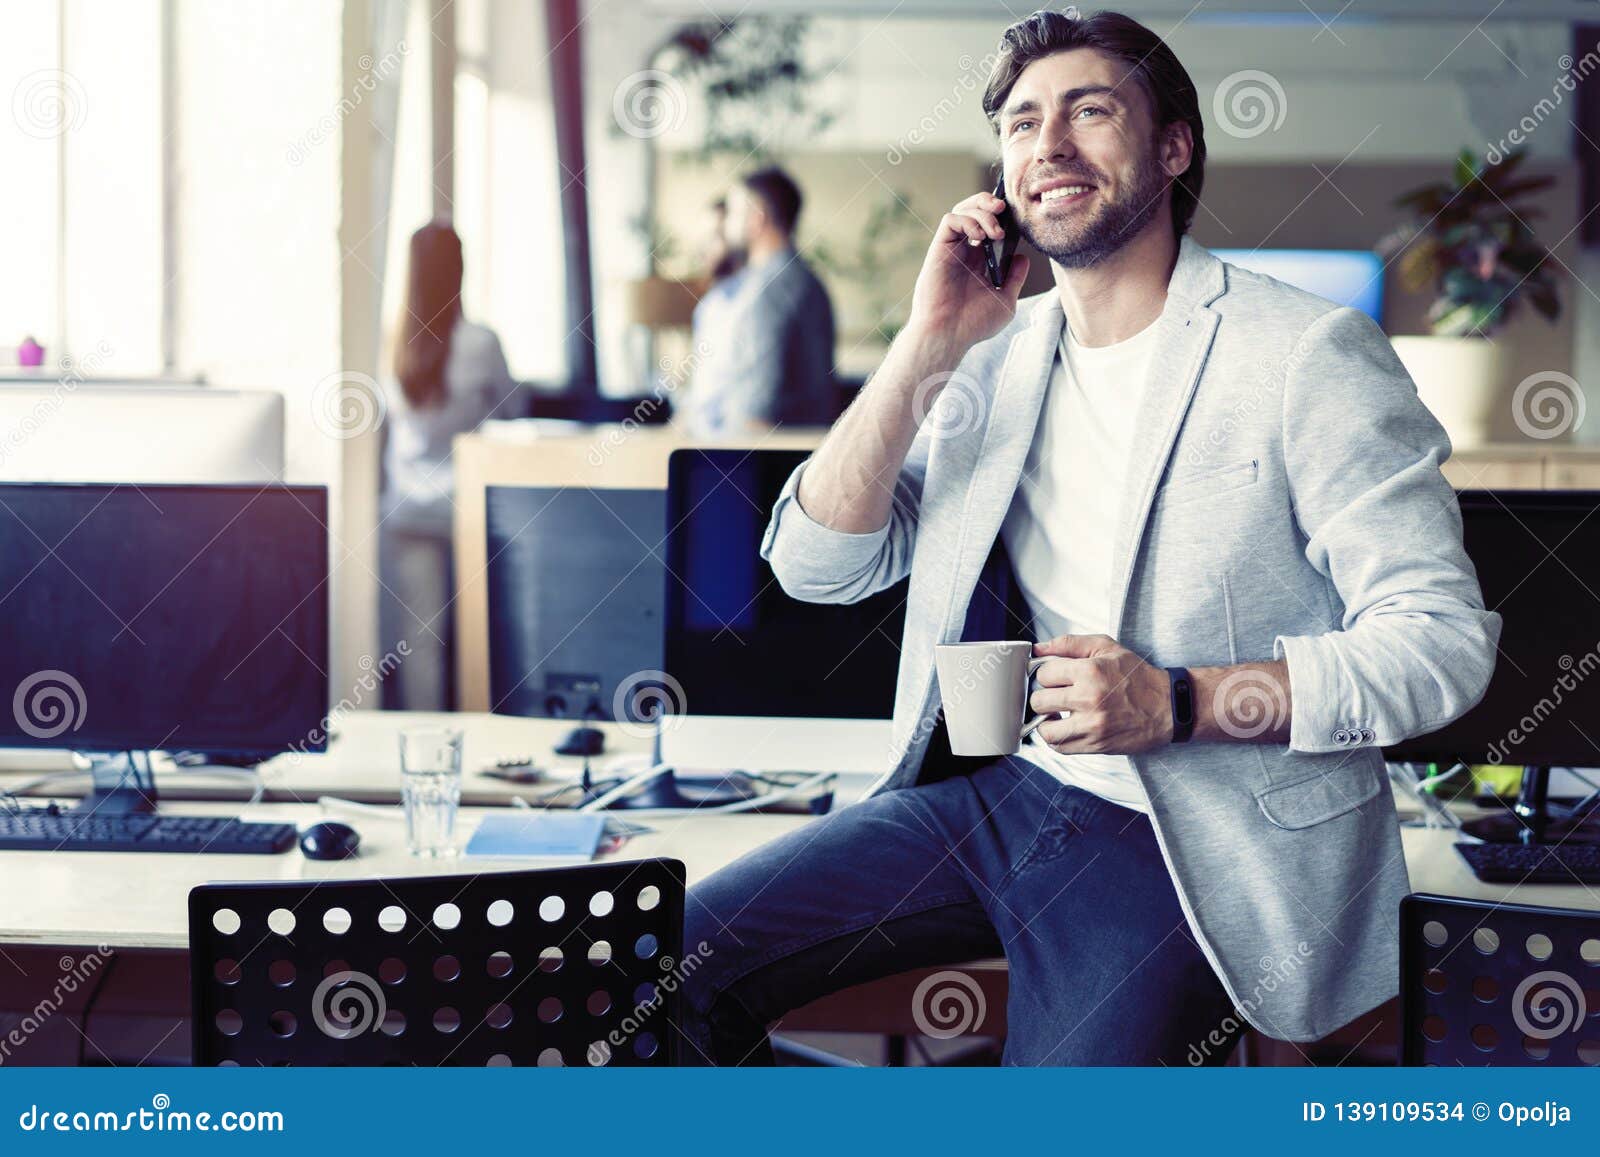 happy man having talk and drinking coffee